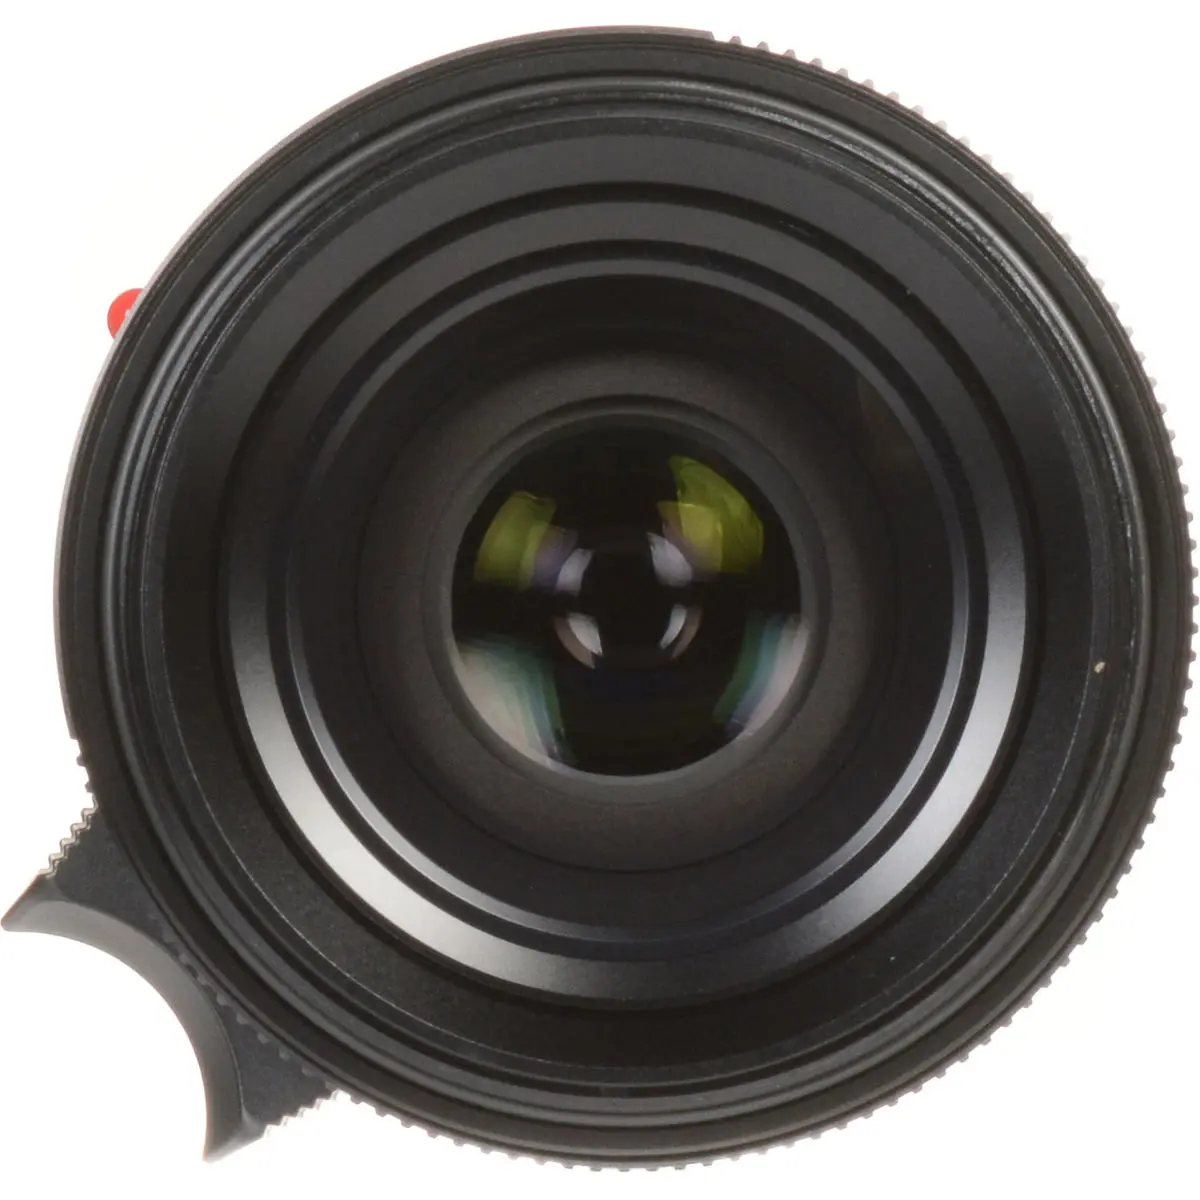 1. Leica Summilux-M 28mm f/1.4 ASPH Black (11668)